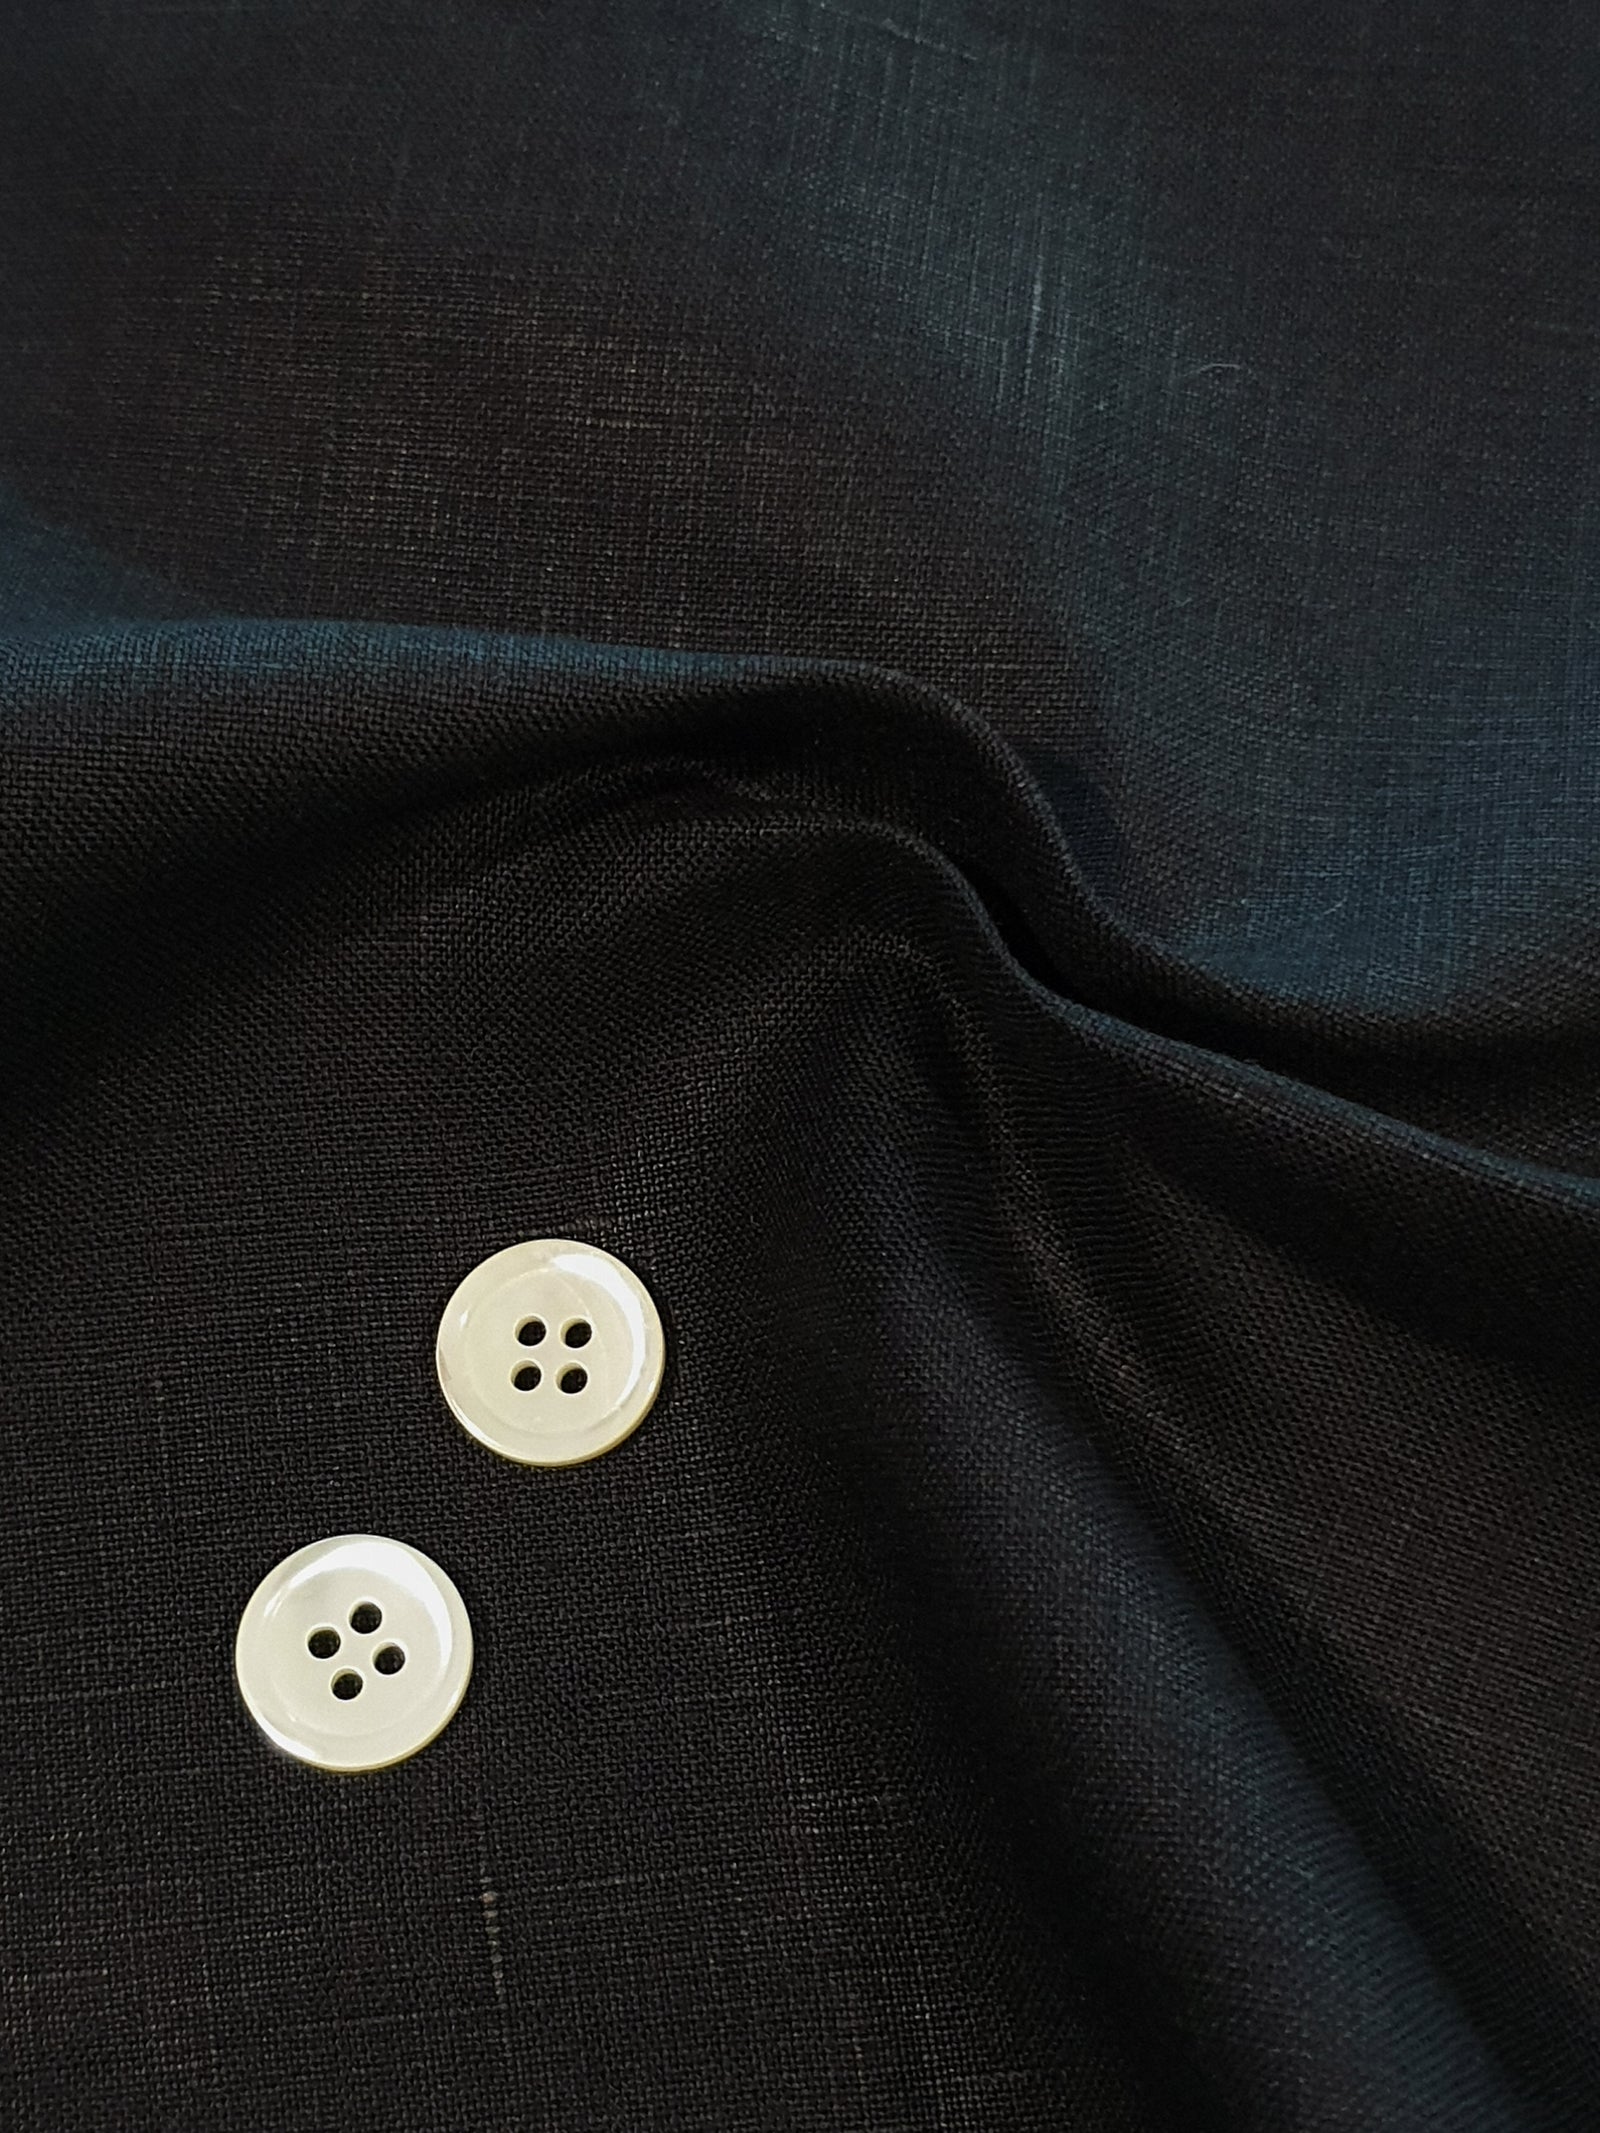 950.057 Black Linen Suiting Fabrics